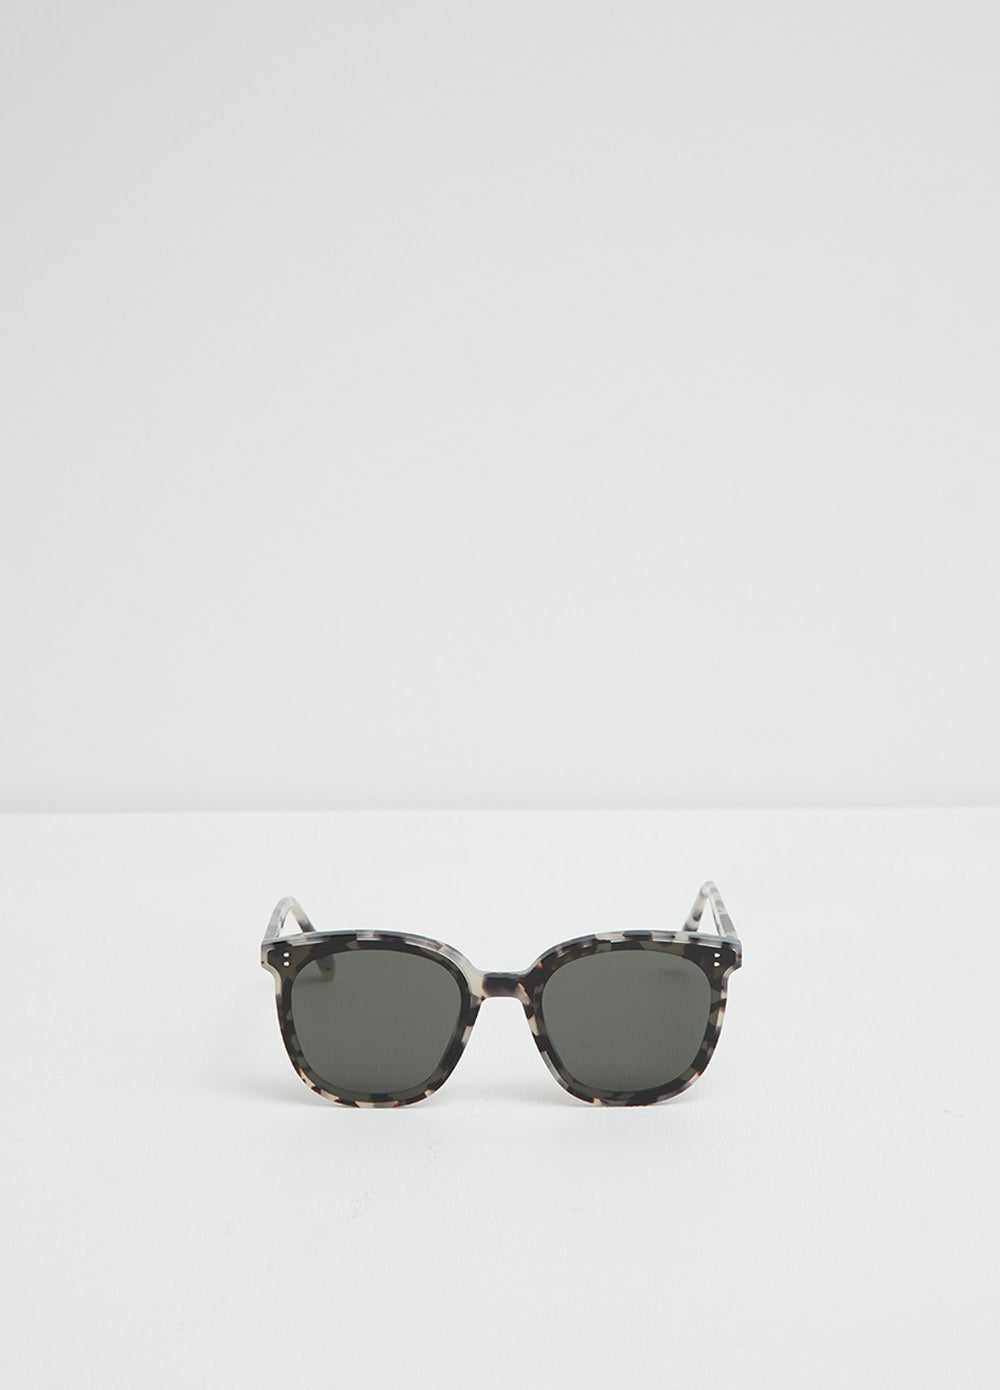 My Ma S5 Sunglasses